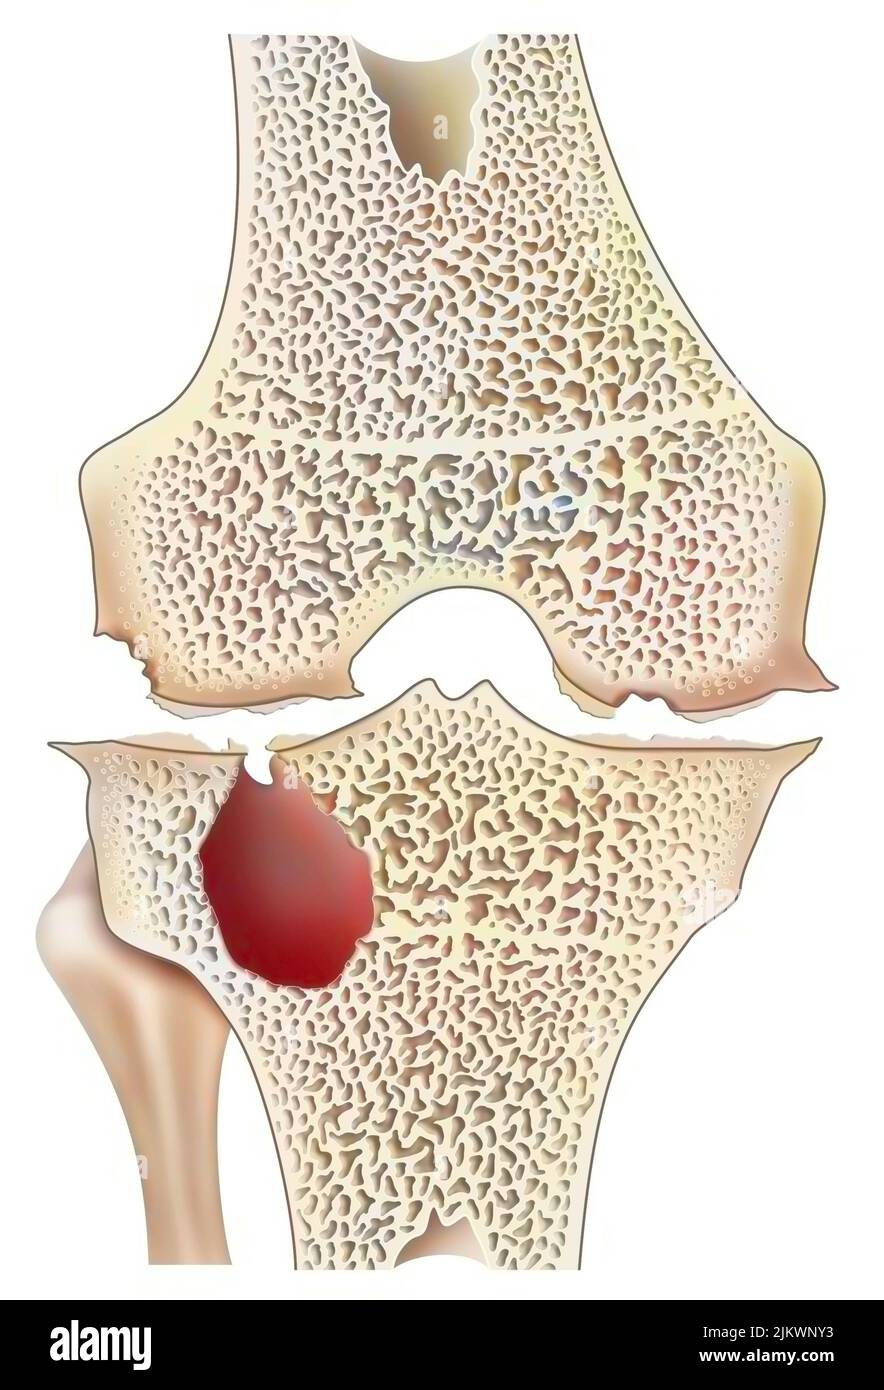 Knee with hemophilic arthropathy with marginal joint erosion. Stock Photo